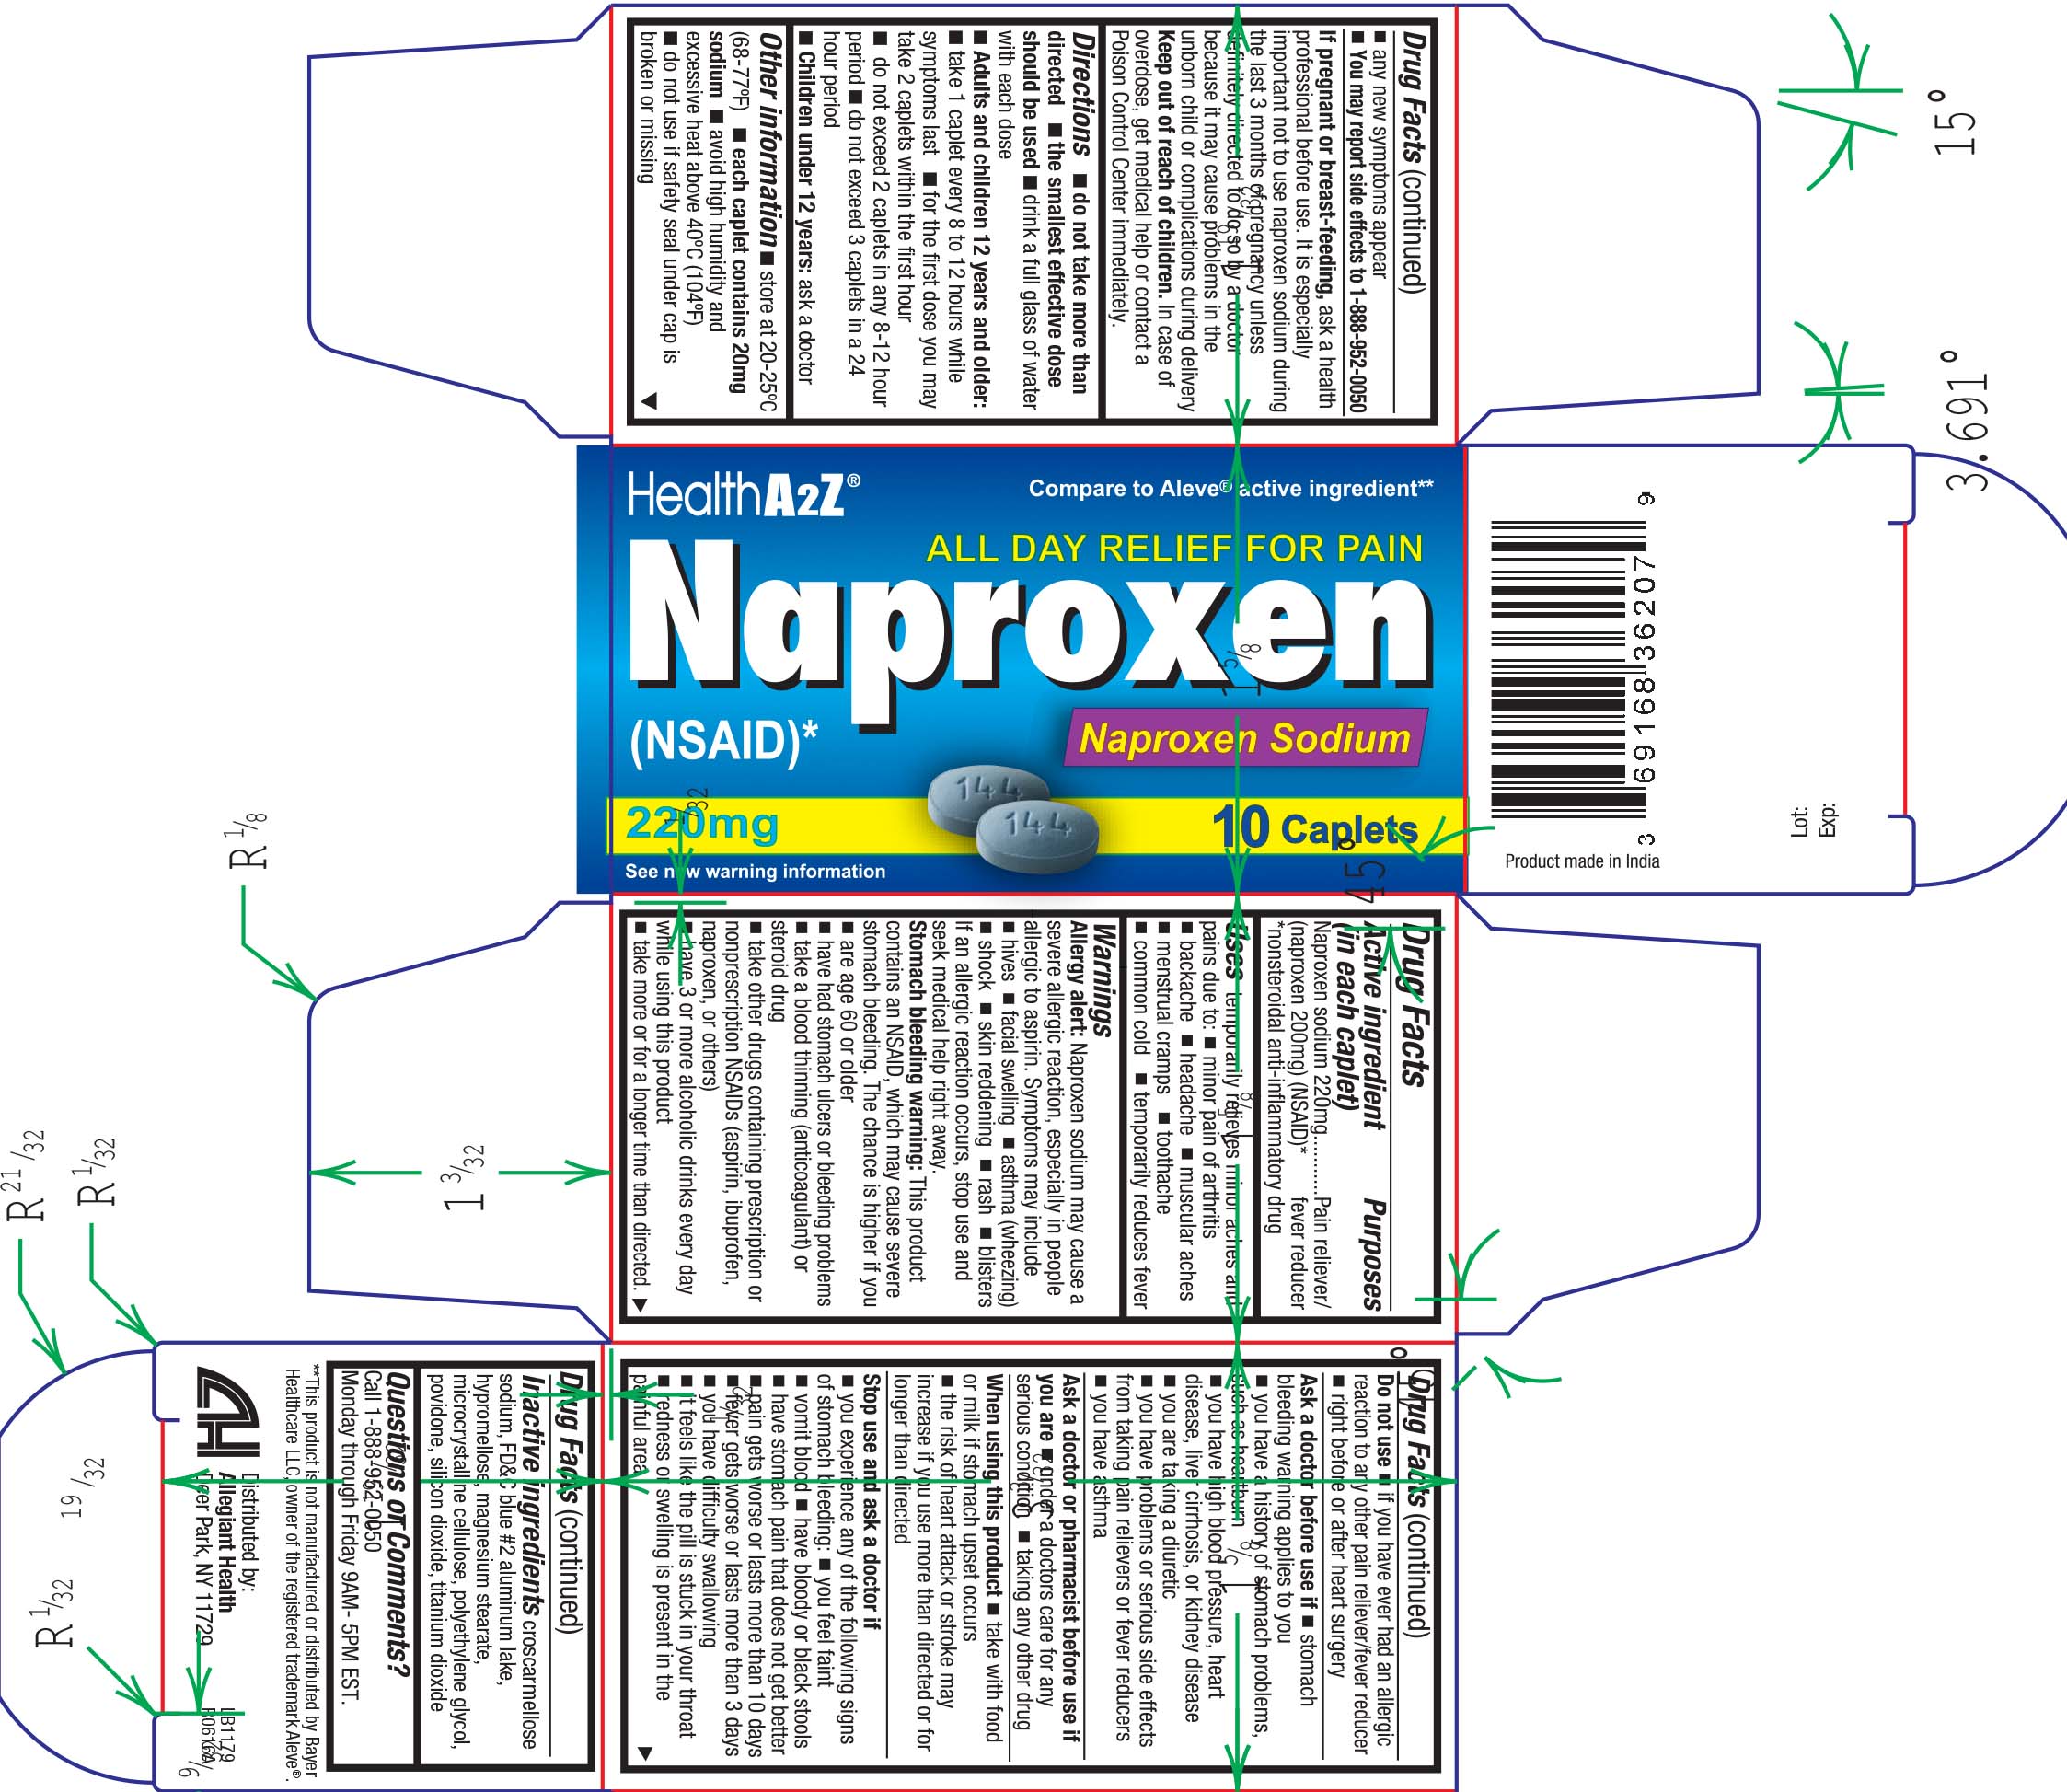 Naproxen Sodium 220mg